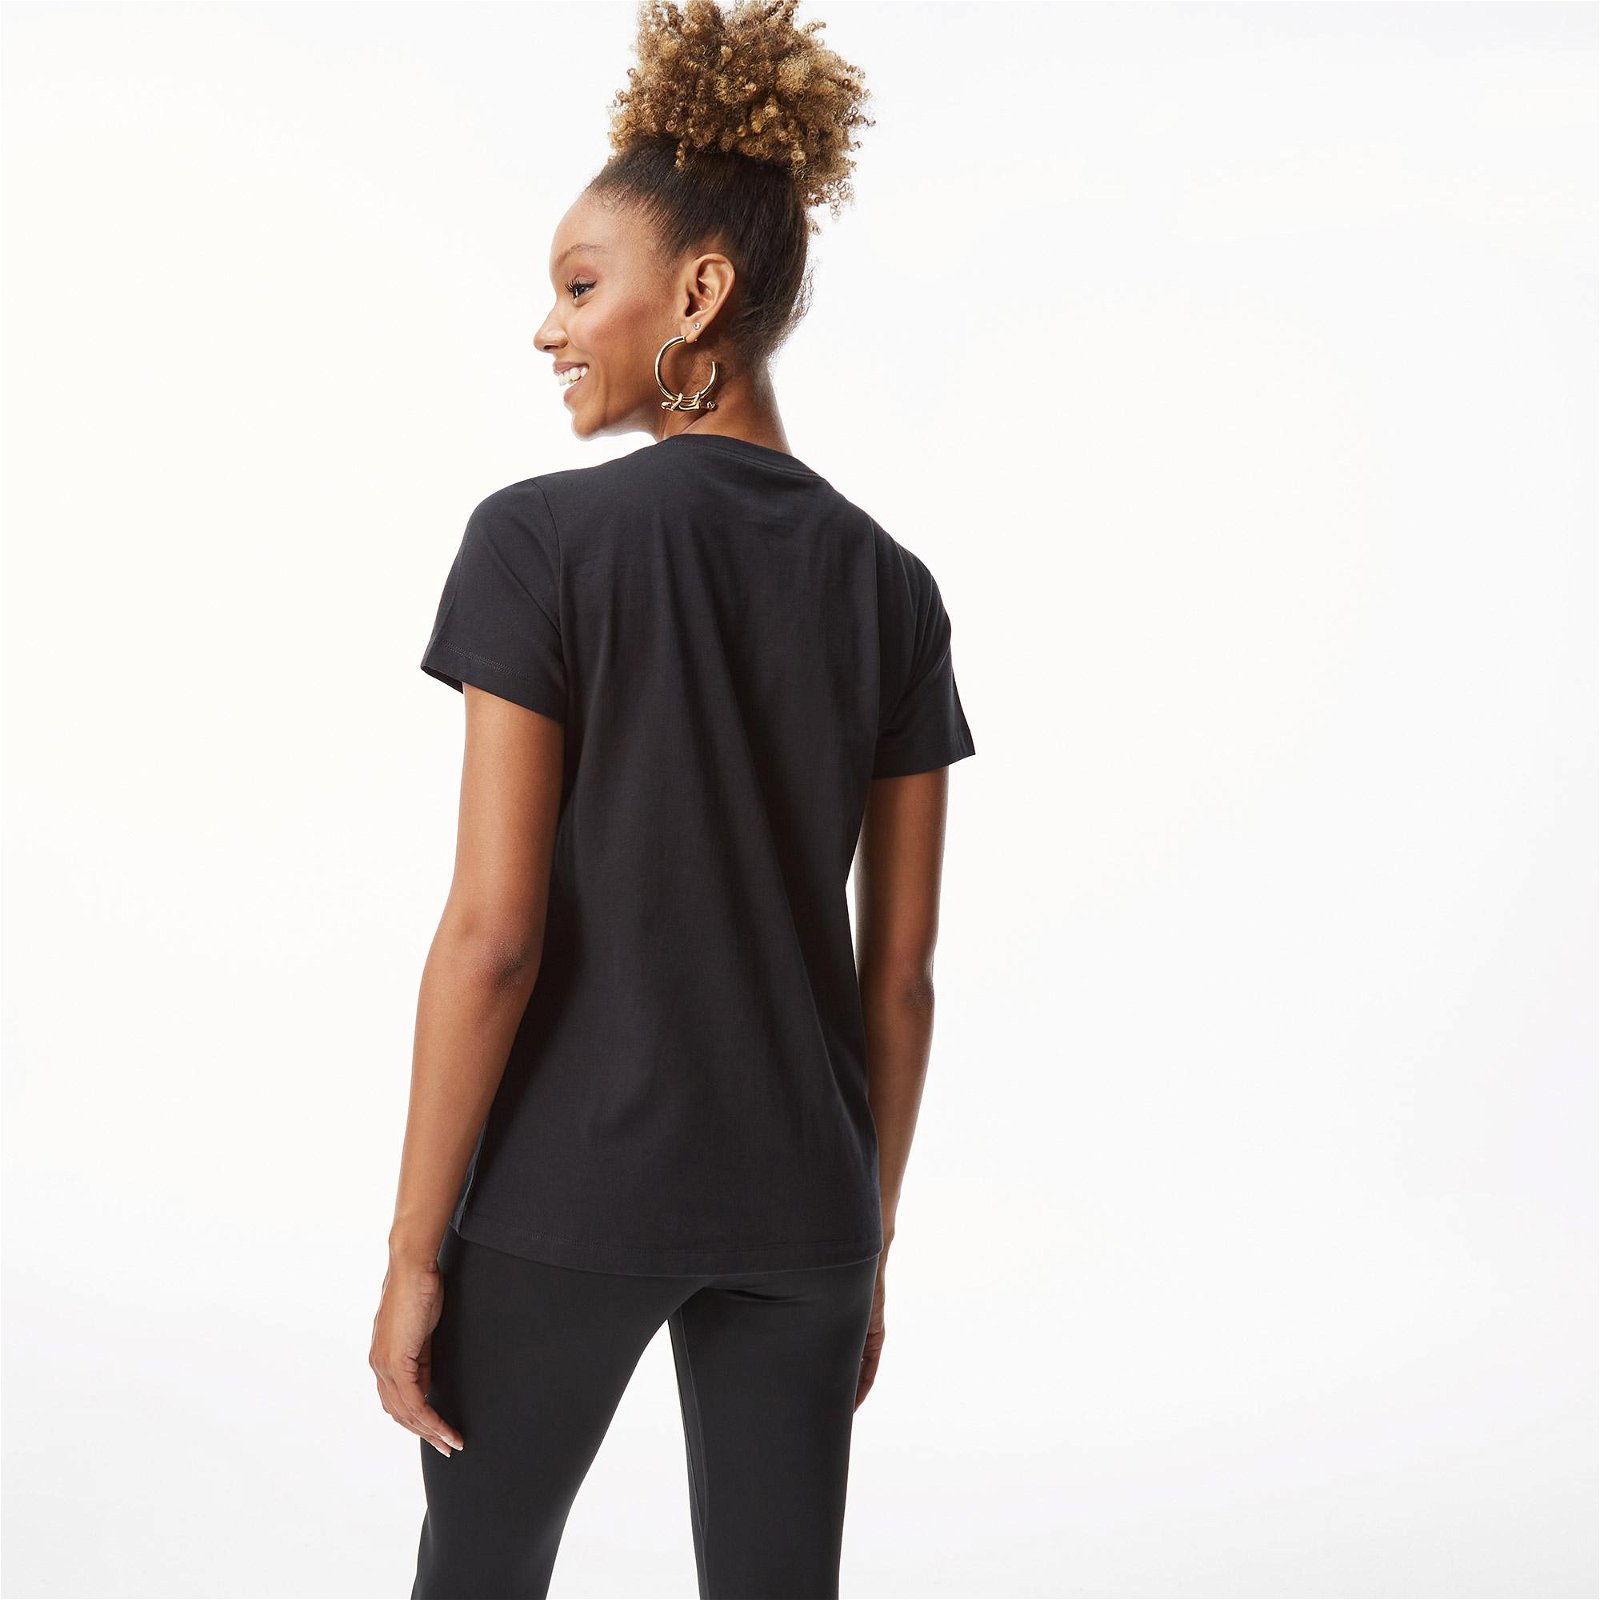 Nike Sportswear Essential Crew Kadın Siyah T-Shirt